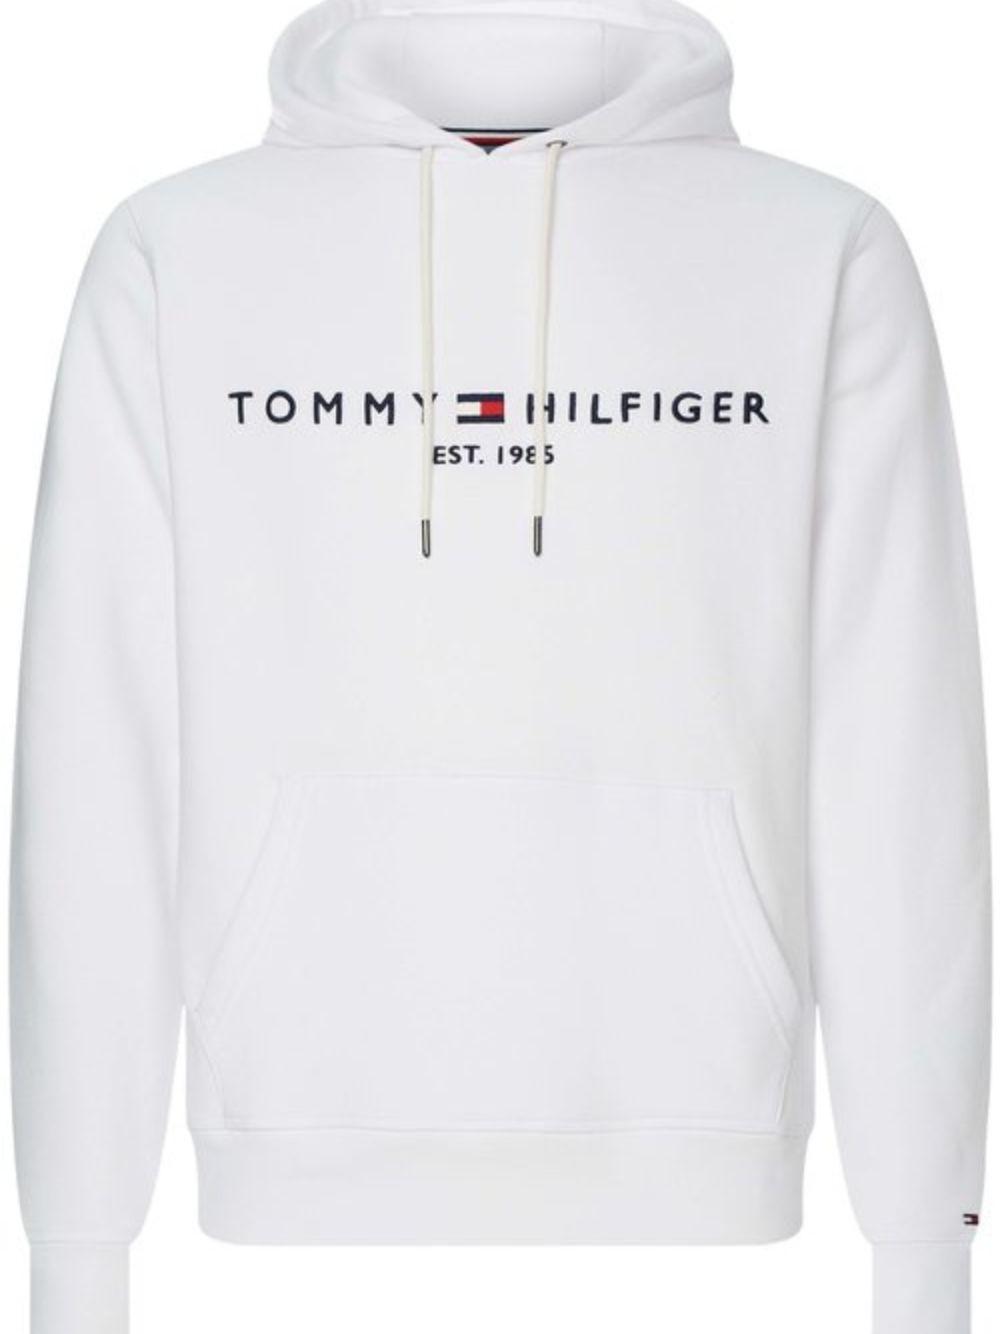 Tommy Hilfiger Basic Embroidered Sweatshirt Felpa Uomo 